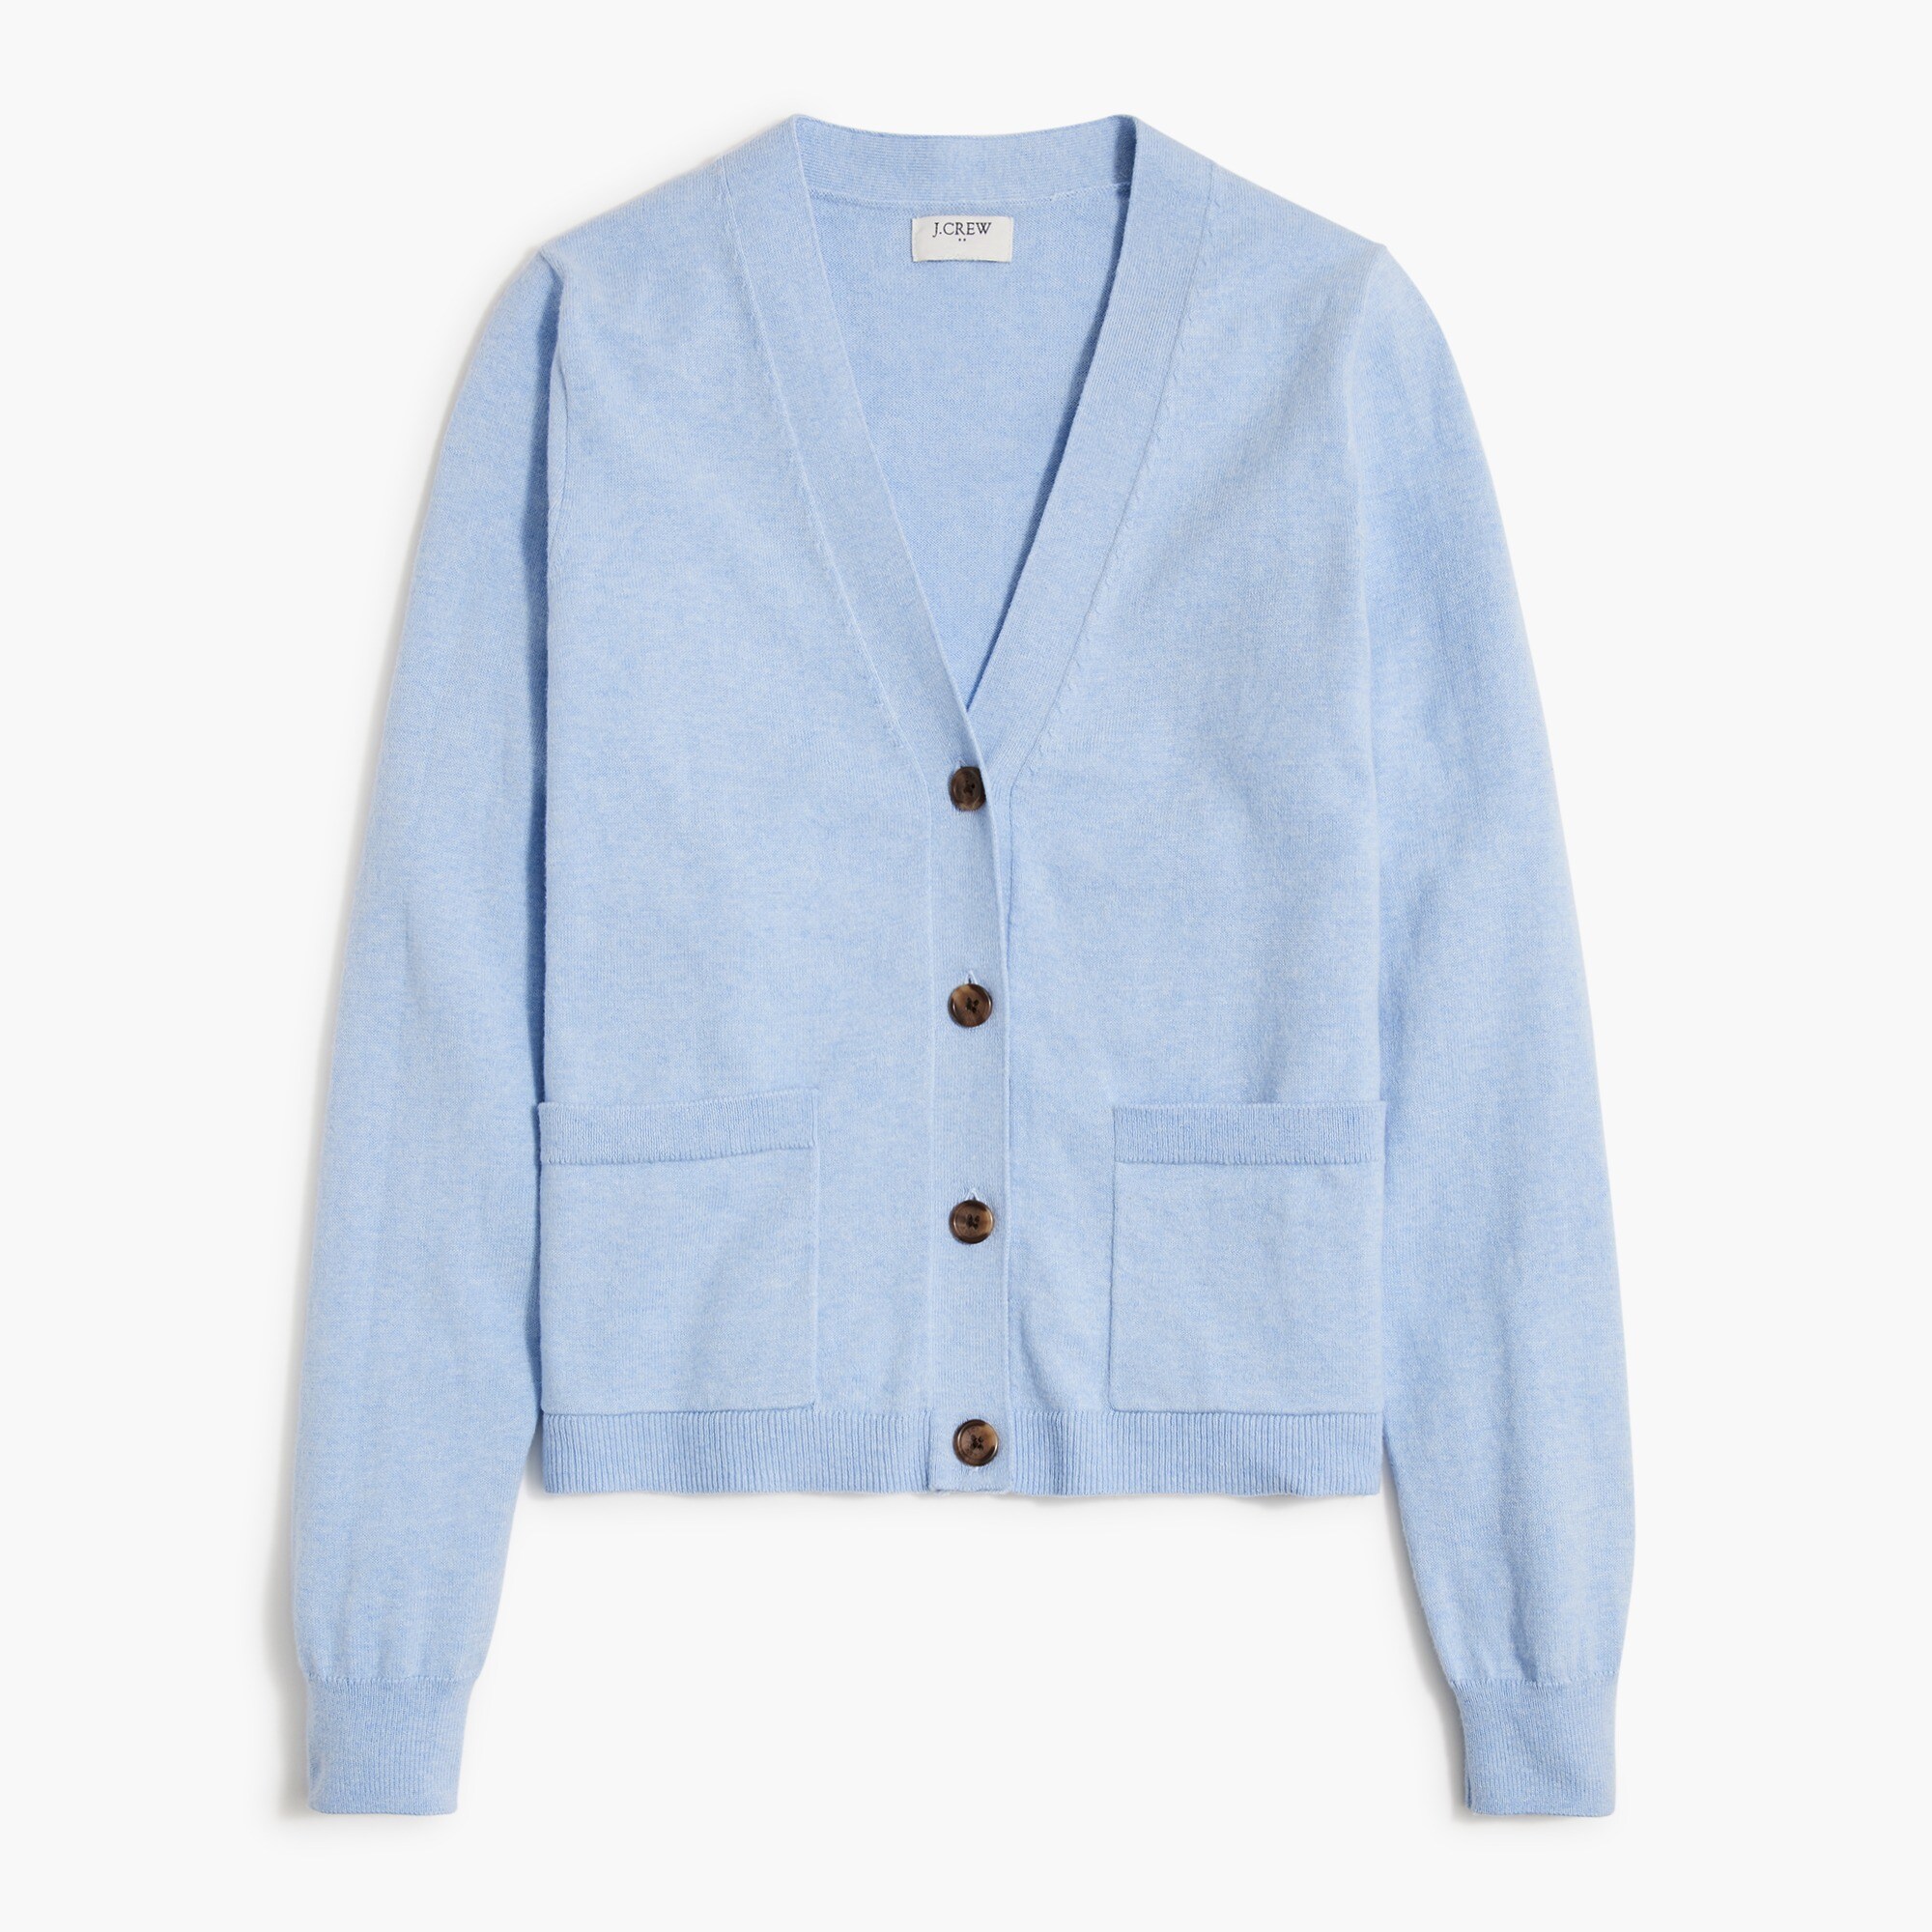  Cotton-blend V-neck cardigan sweater